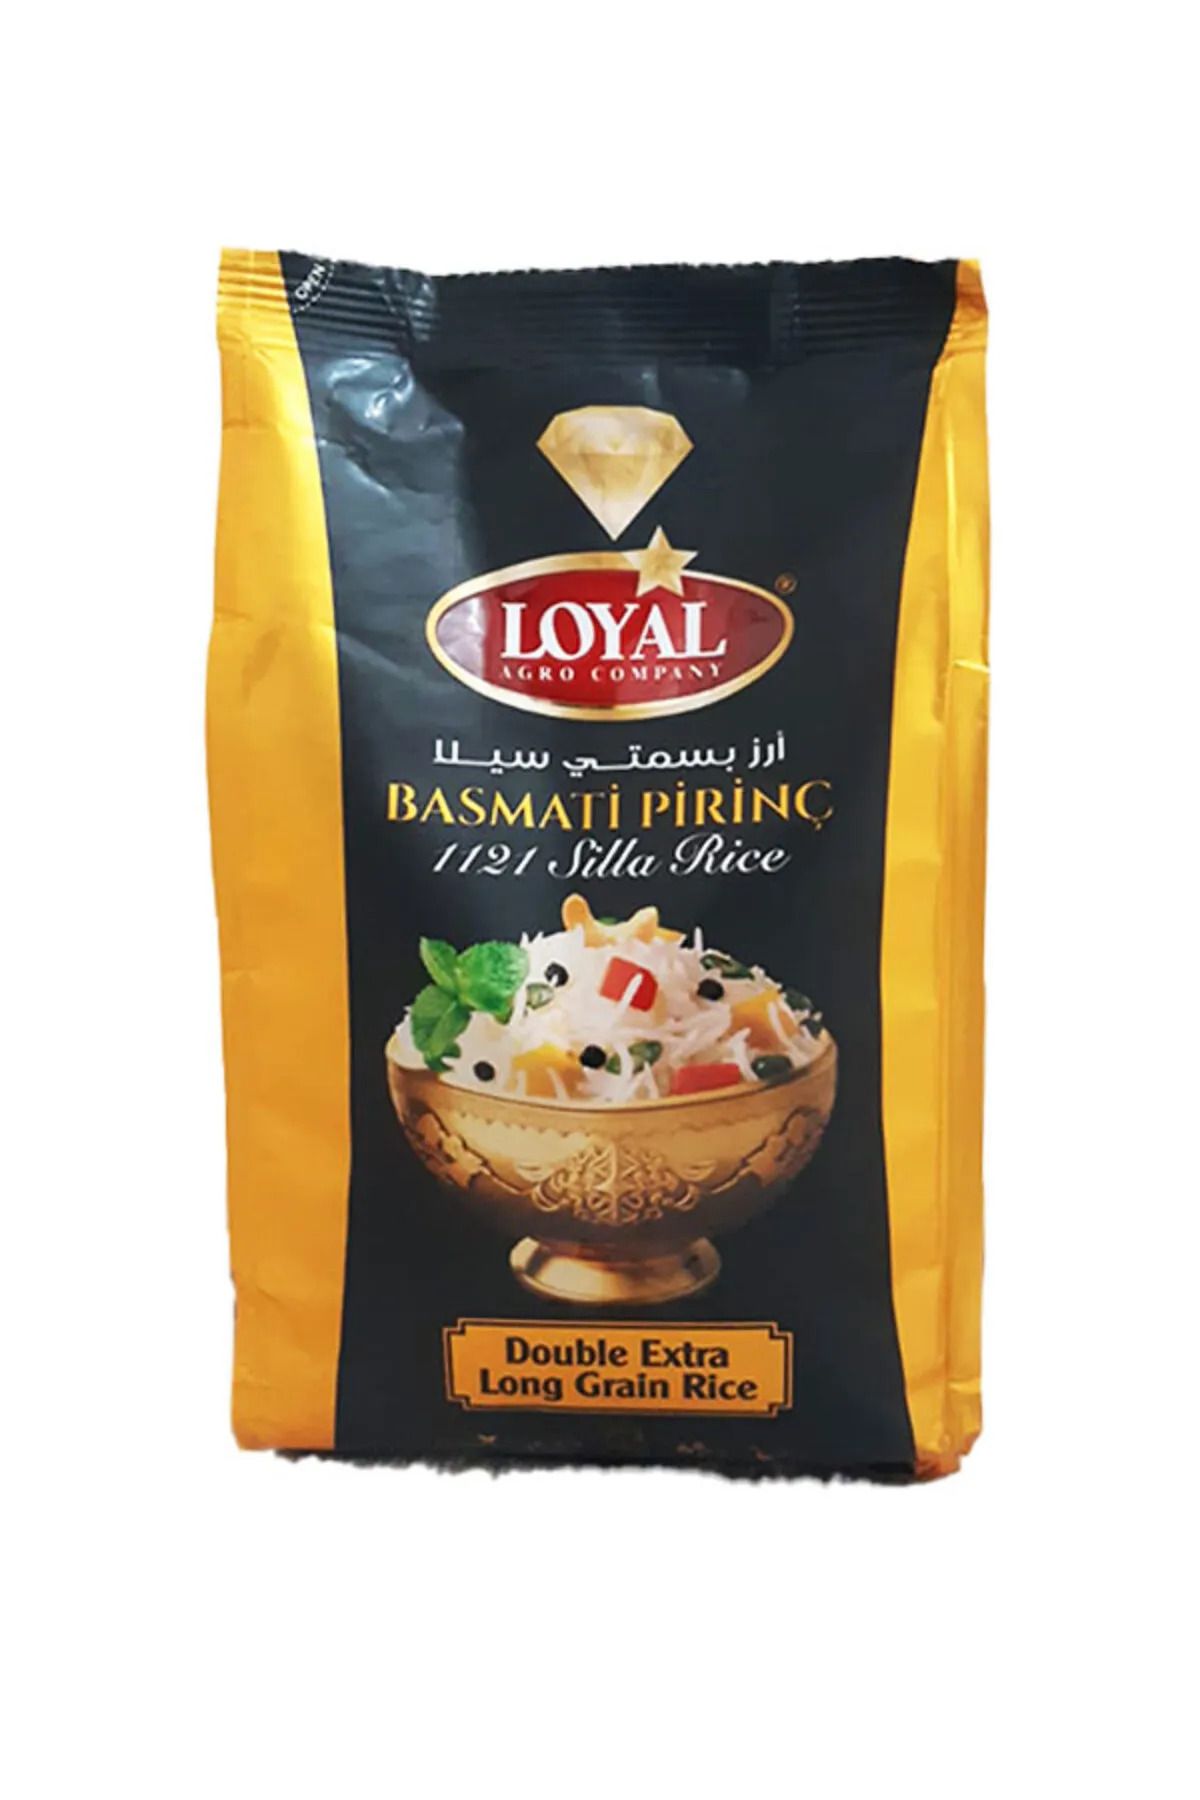 Loyal Double Extra Long Grain Basmati Pirinç 900 gr